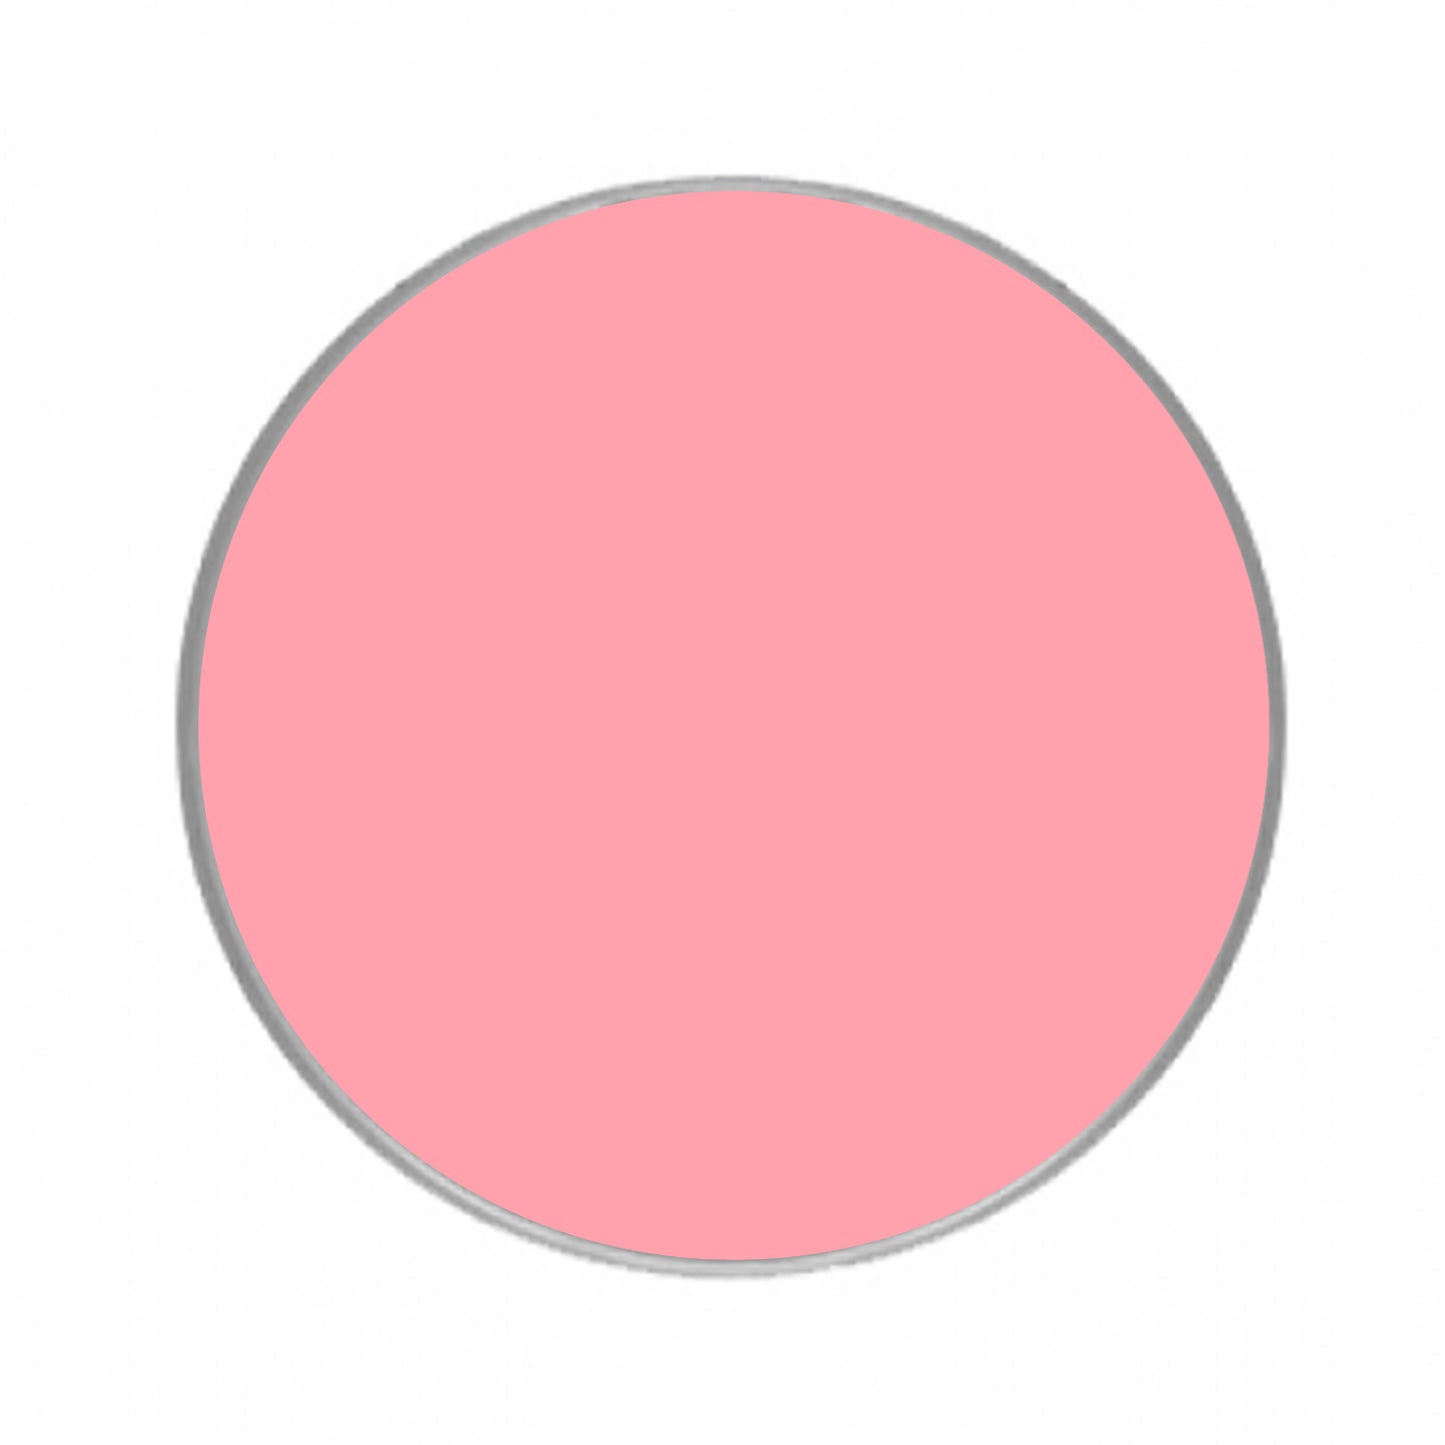 Kryolan Aquacolor Pink Face Paint Refills - Light Pink 3 (4 ml)